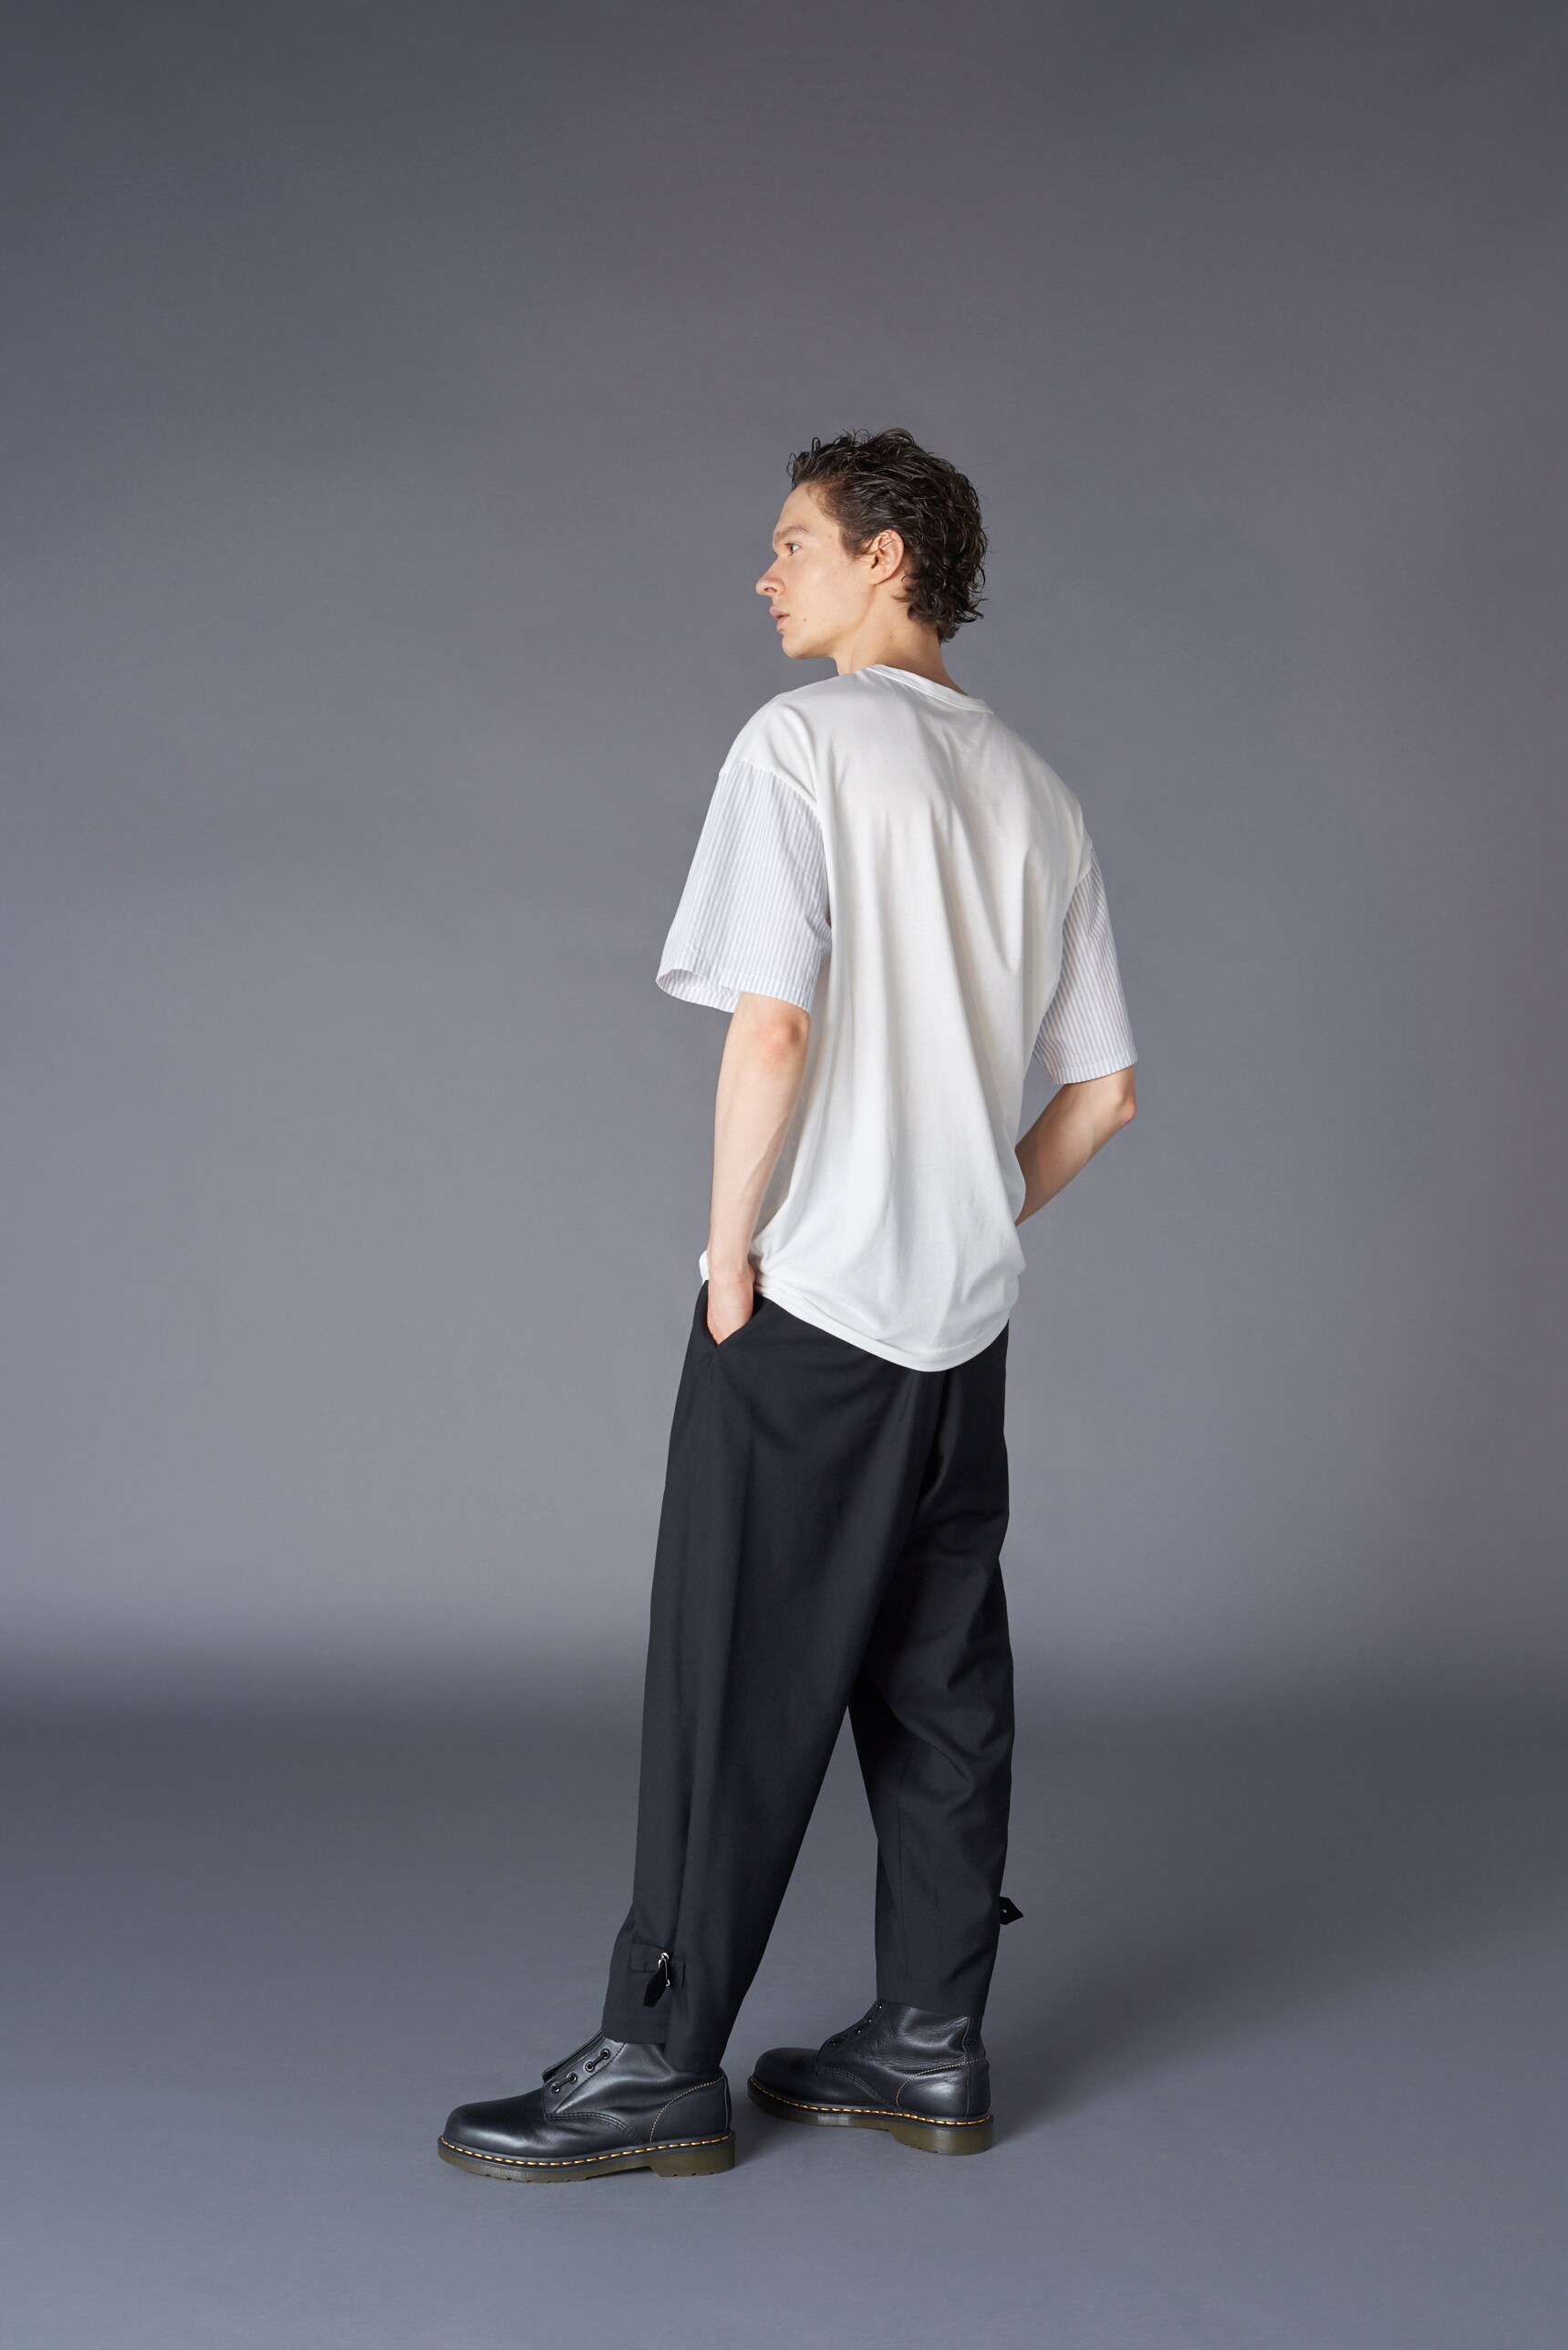 Stripe/Jersey combination Shirt docking short sleeves T